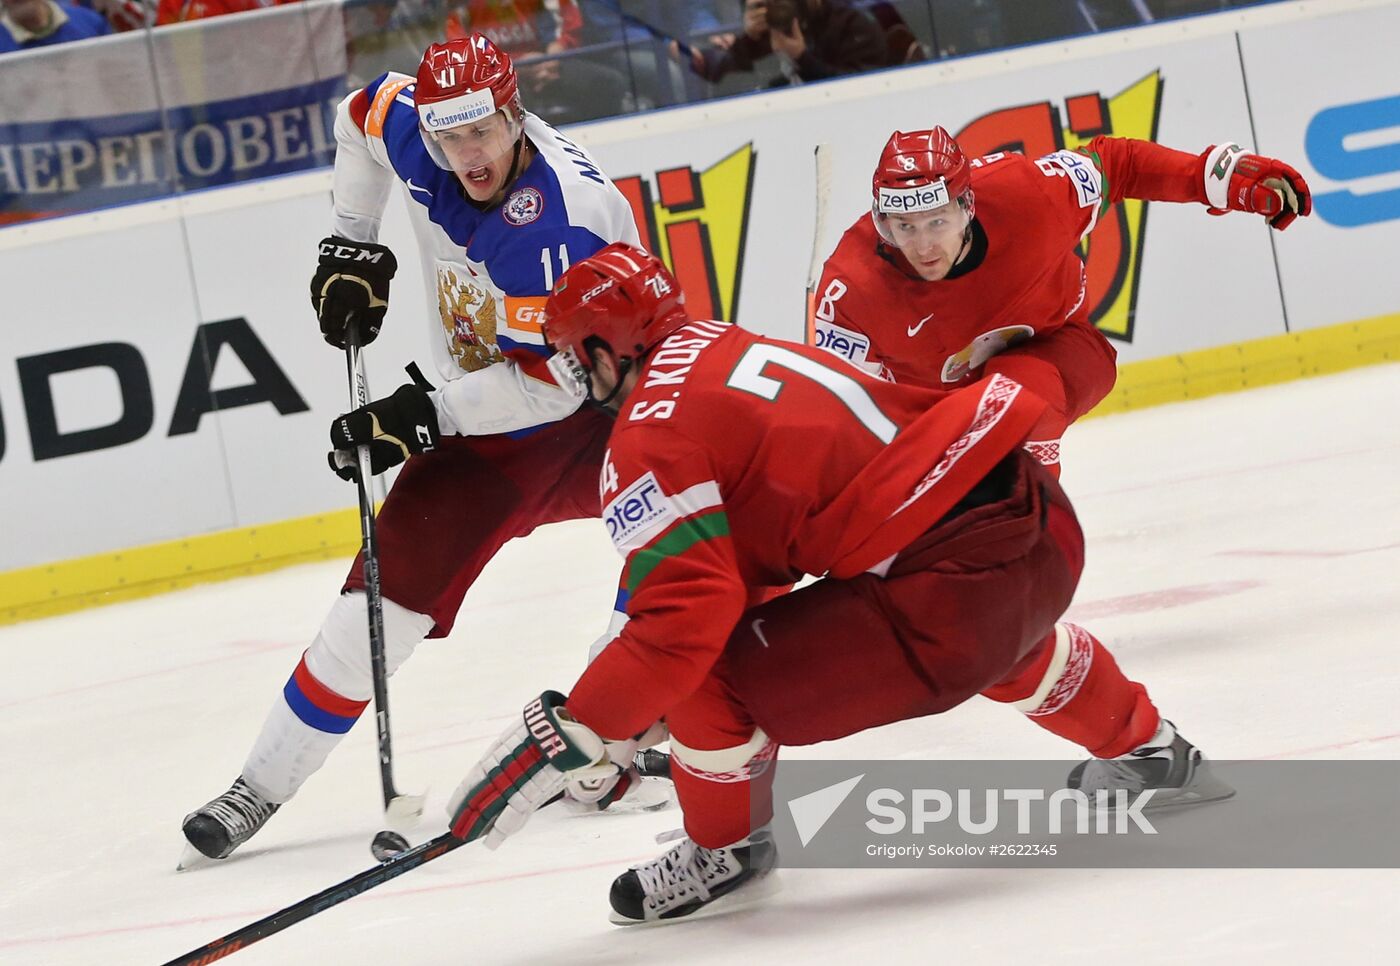 2015 Ice Hockey World Championship. Russia vs. Belarus